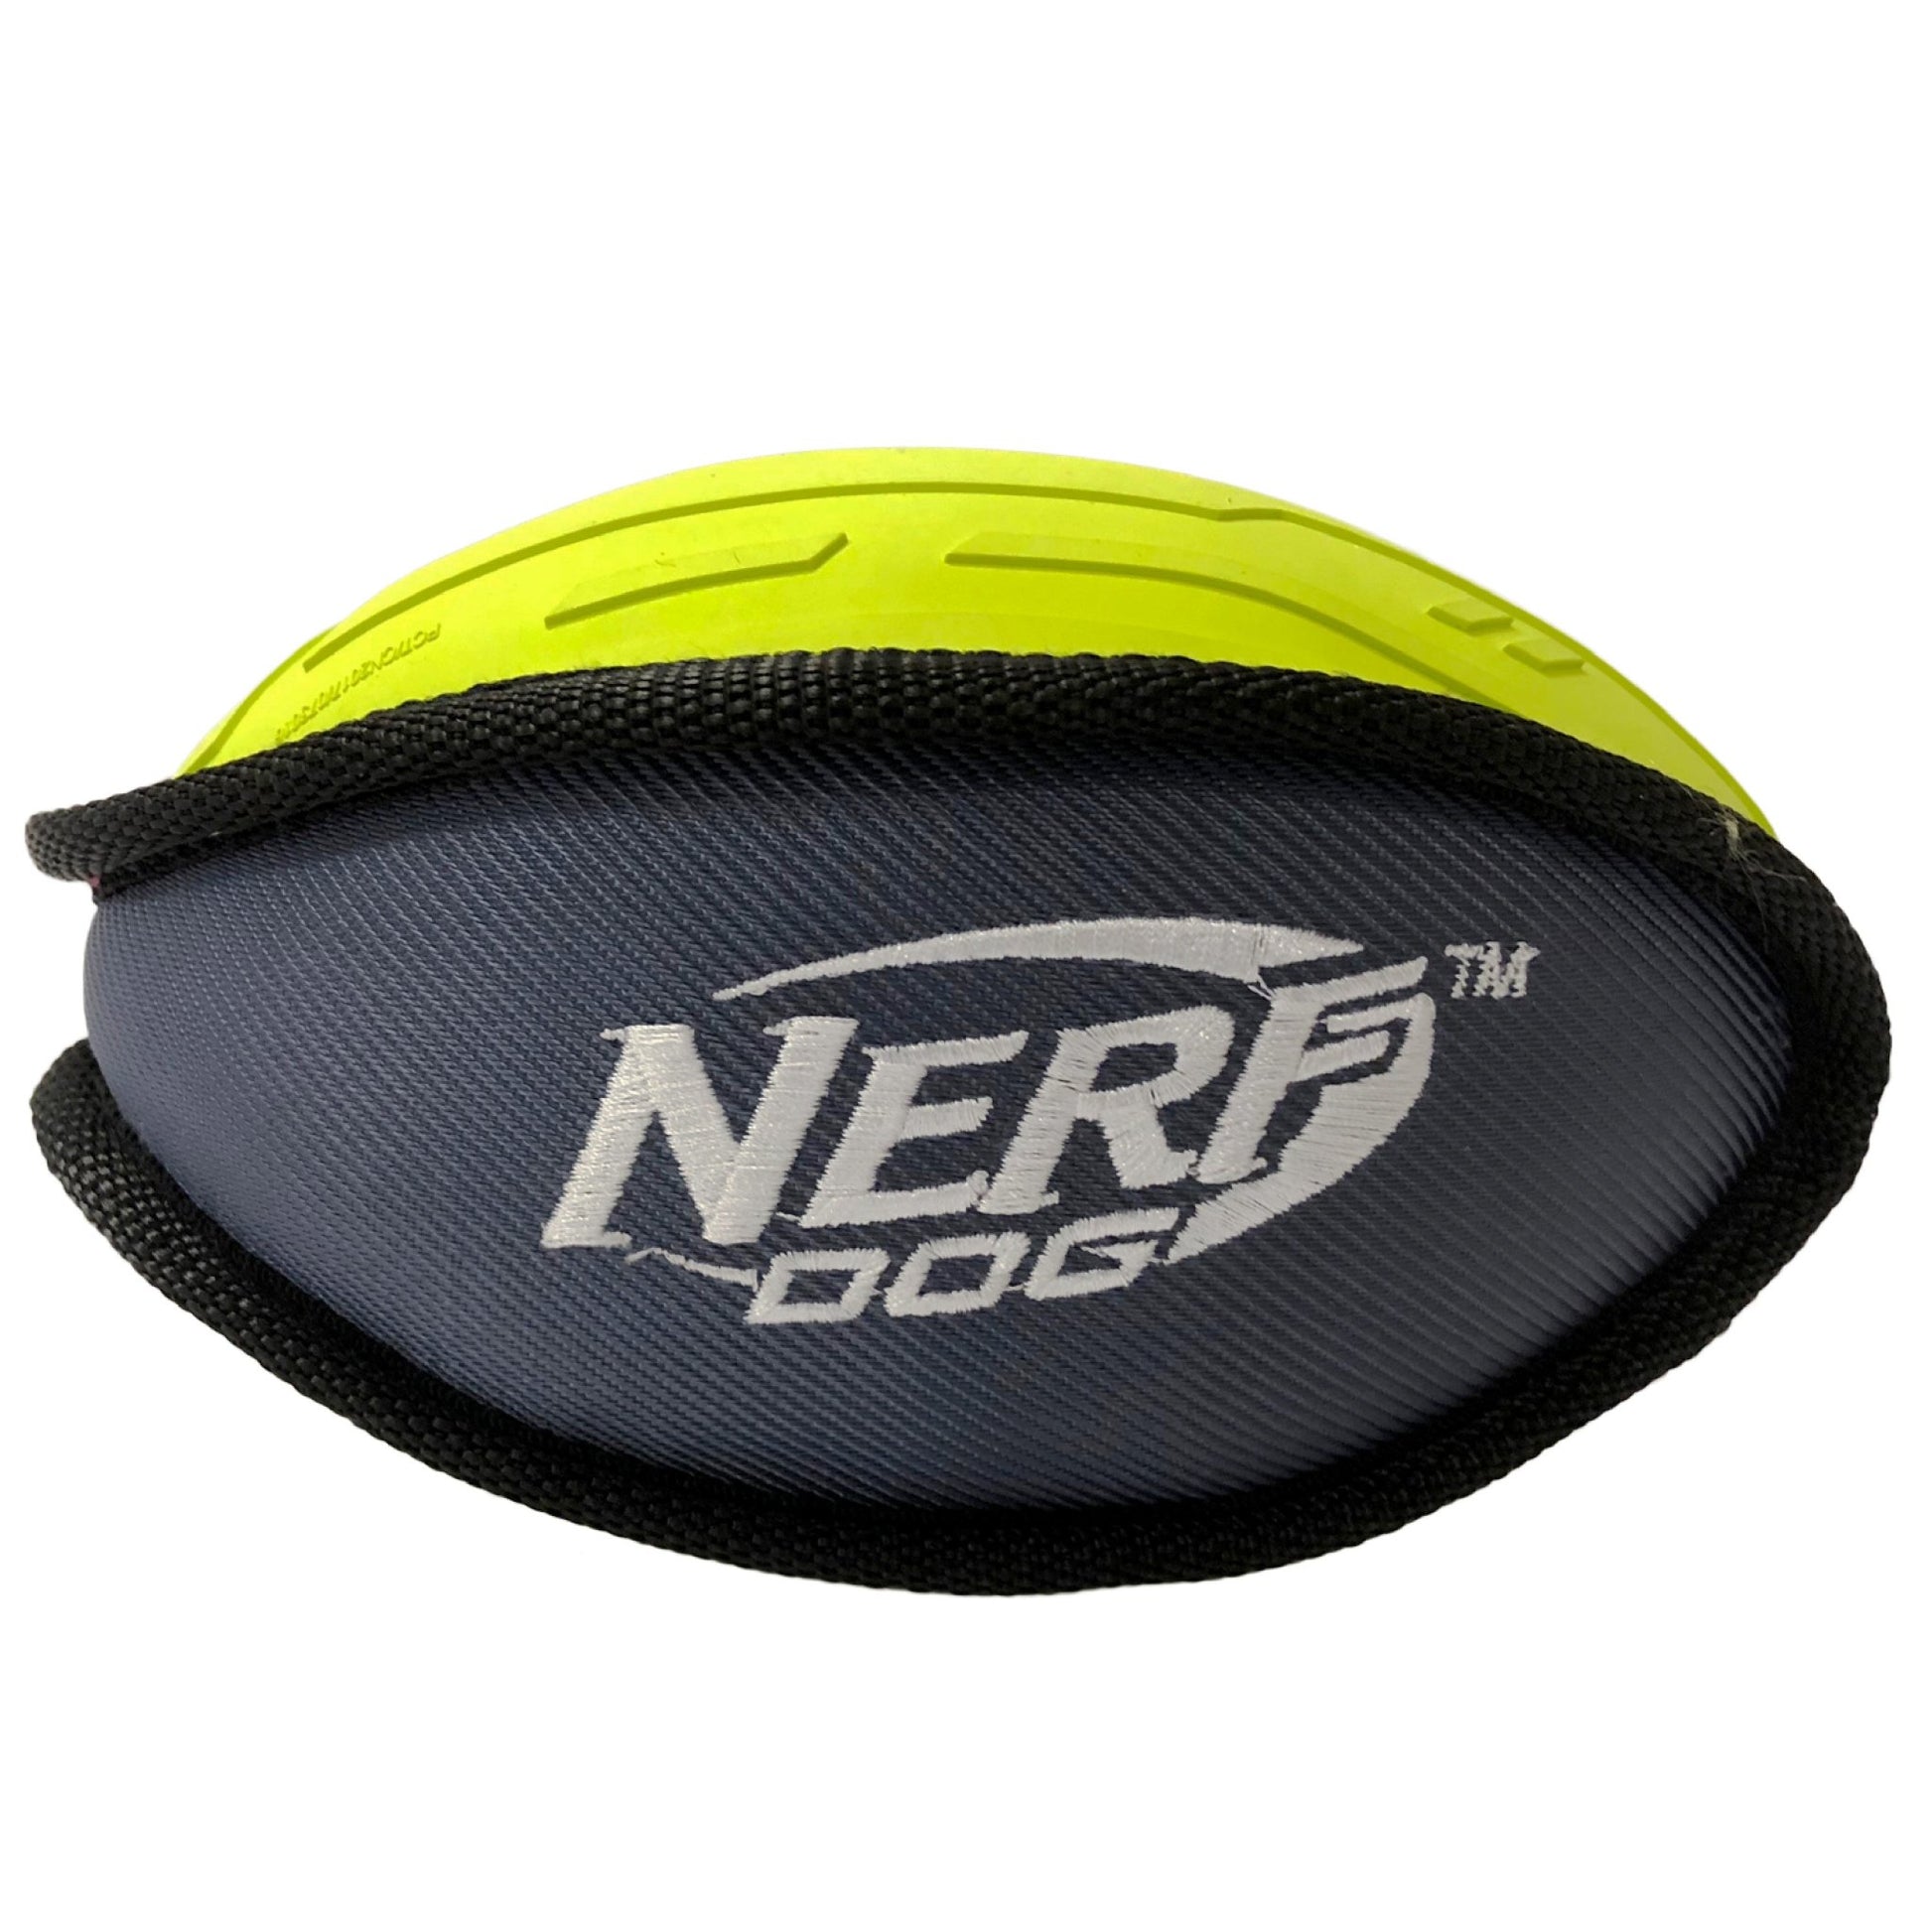 Nerf Tuff Rubber Nylon Plush Football - Green/Grey - Woonona Petfood & Produce